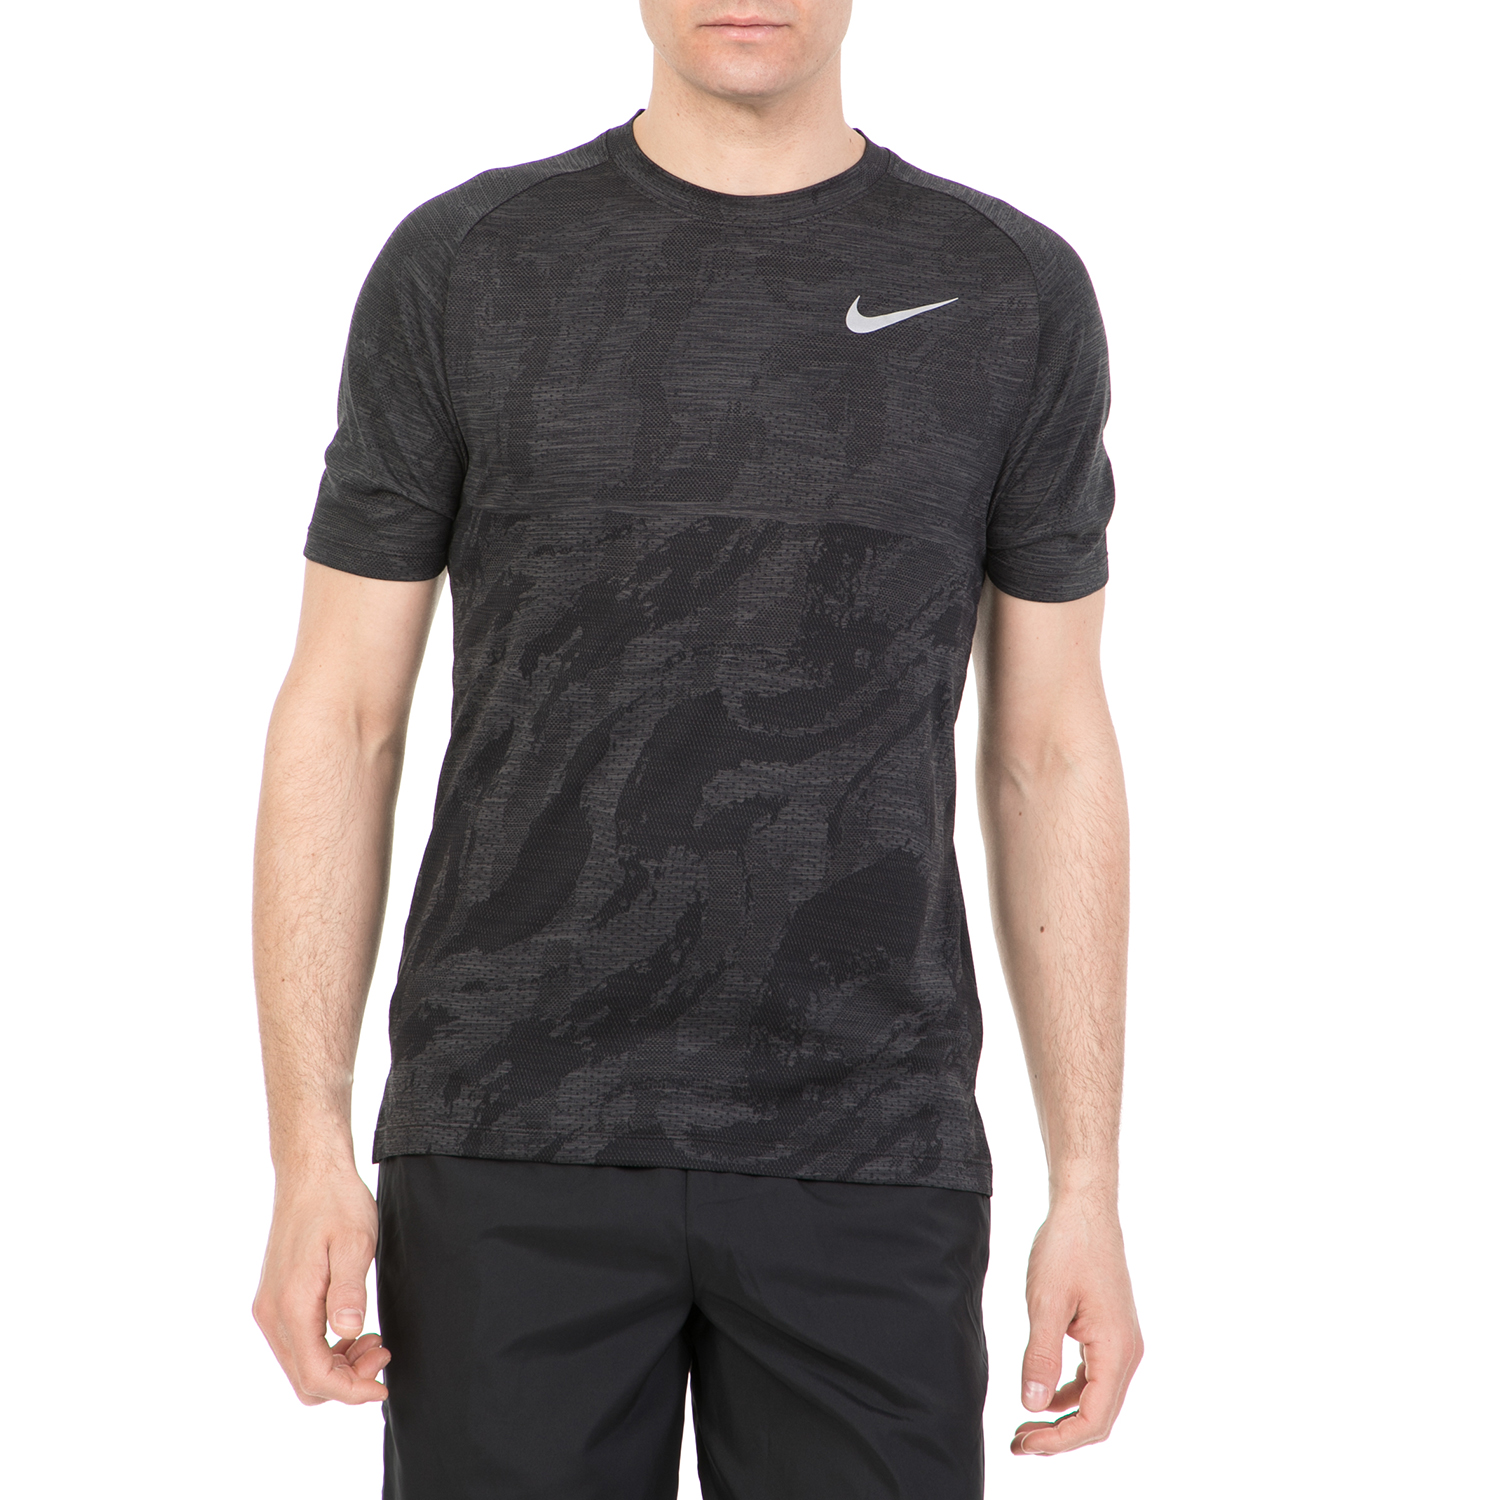 NIKE - Ανδρική κοντομάνικη μπλούζα NIKE DRY MEDALIST μαύρη-γκρι Ανδρικά/Ρούχα/Αθλητικά/T-shirt